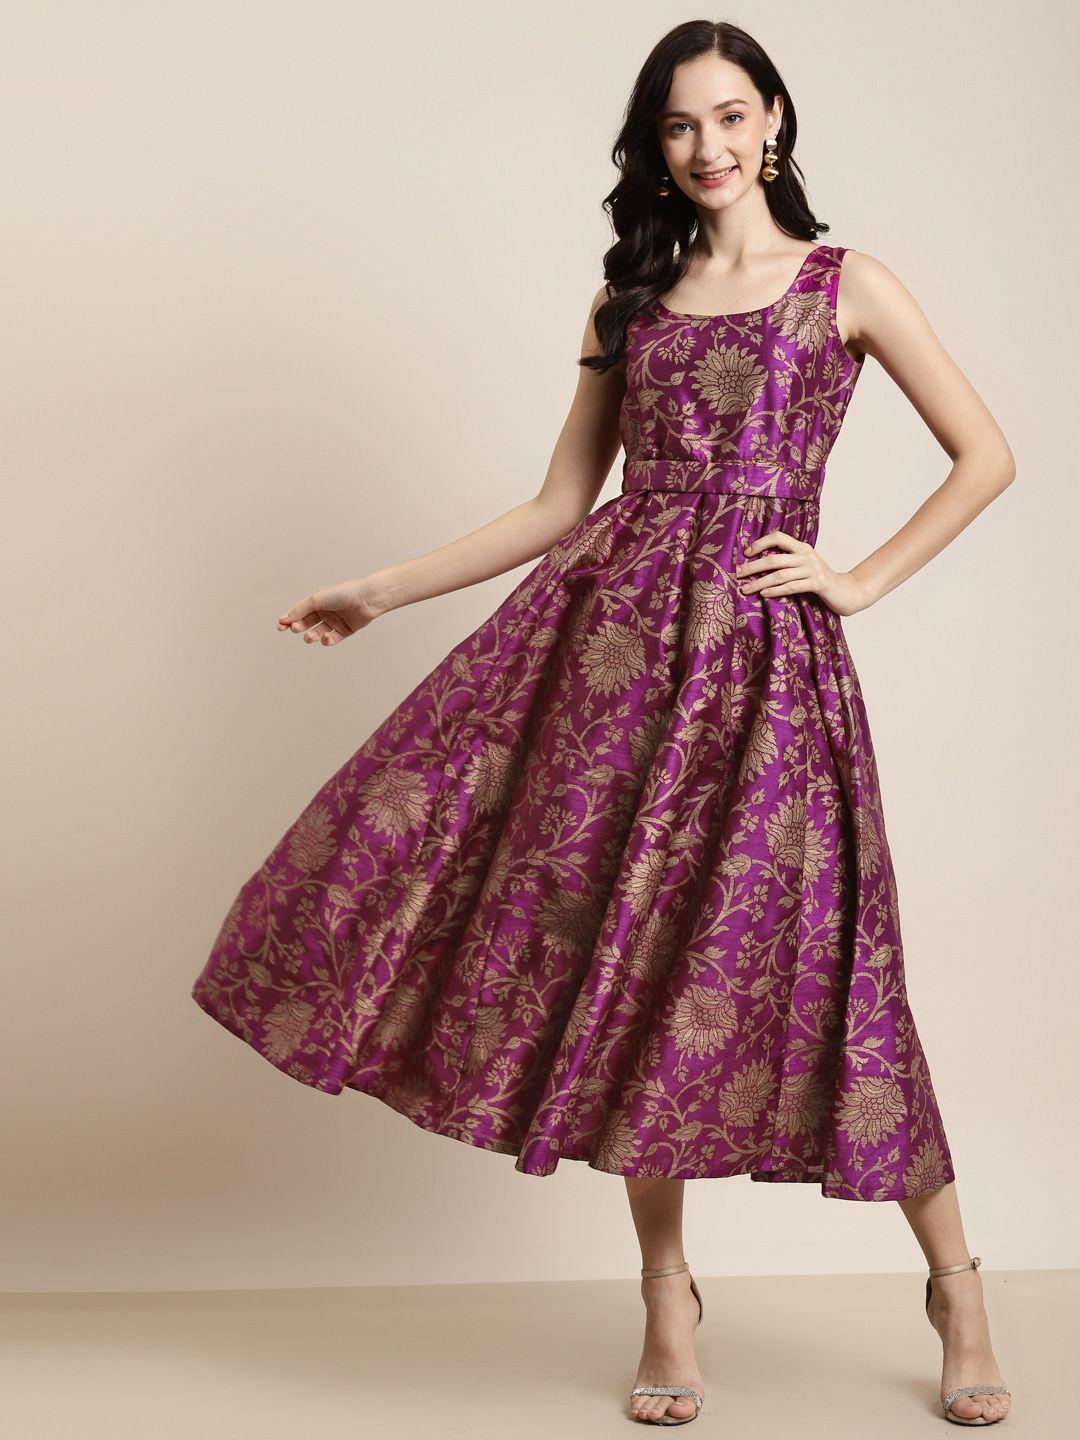 shae by sassafras purple & gold-toned floral jacquard self-belt maxi dress